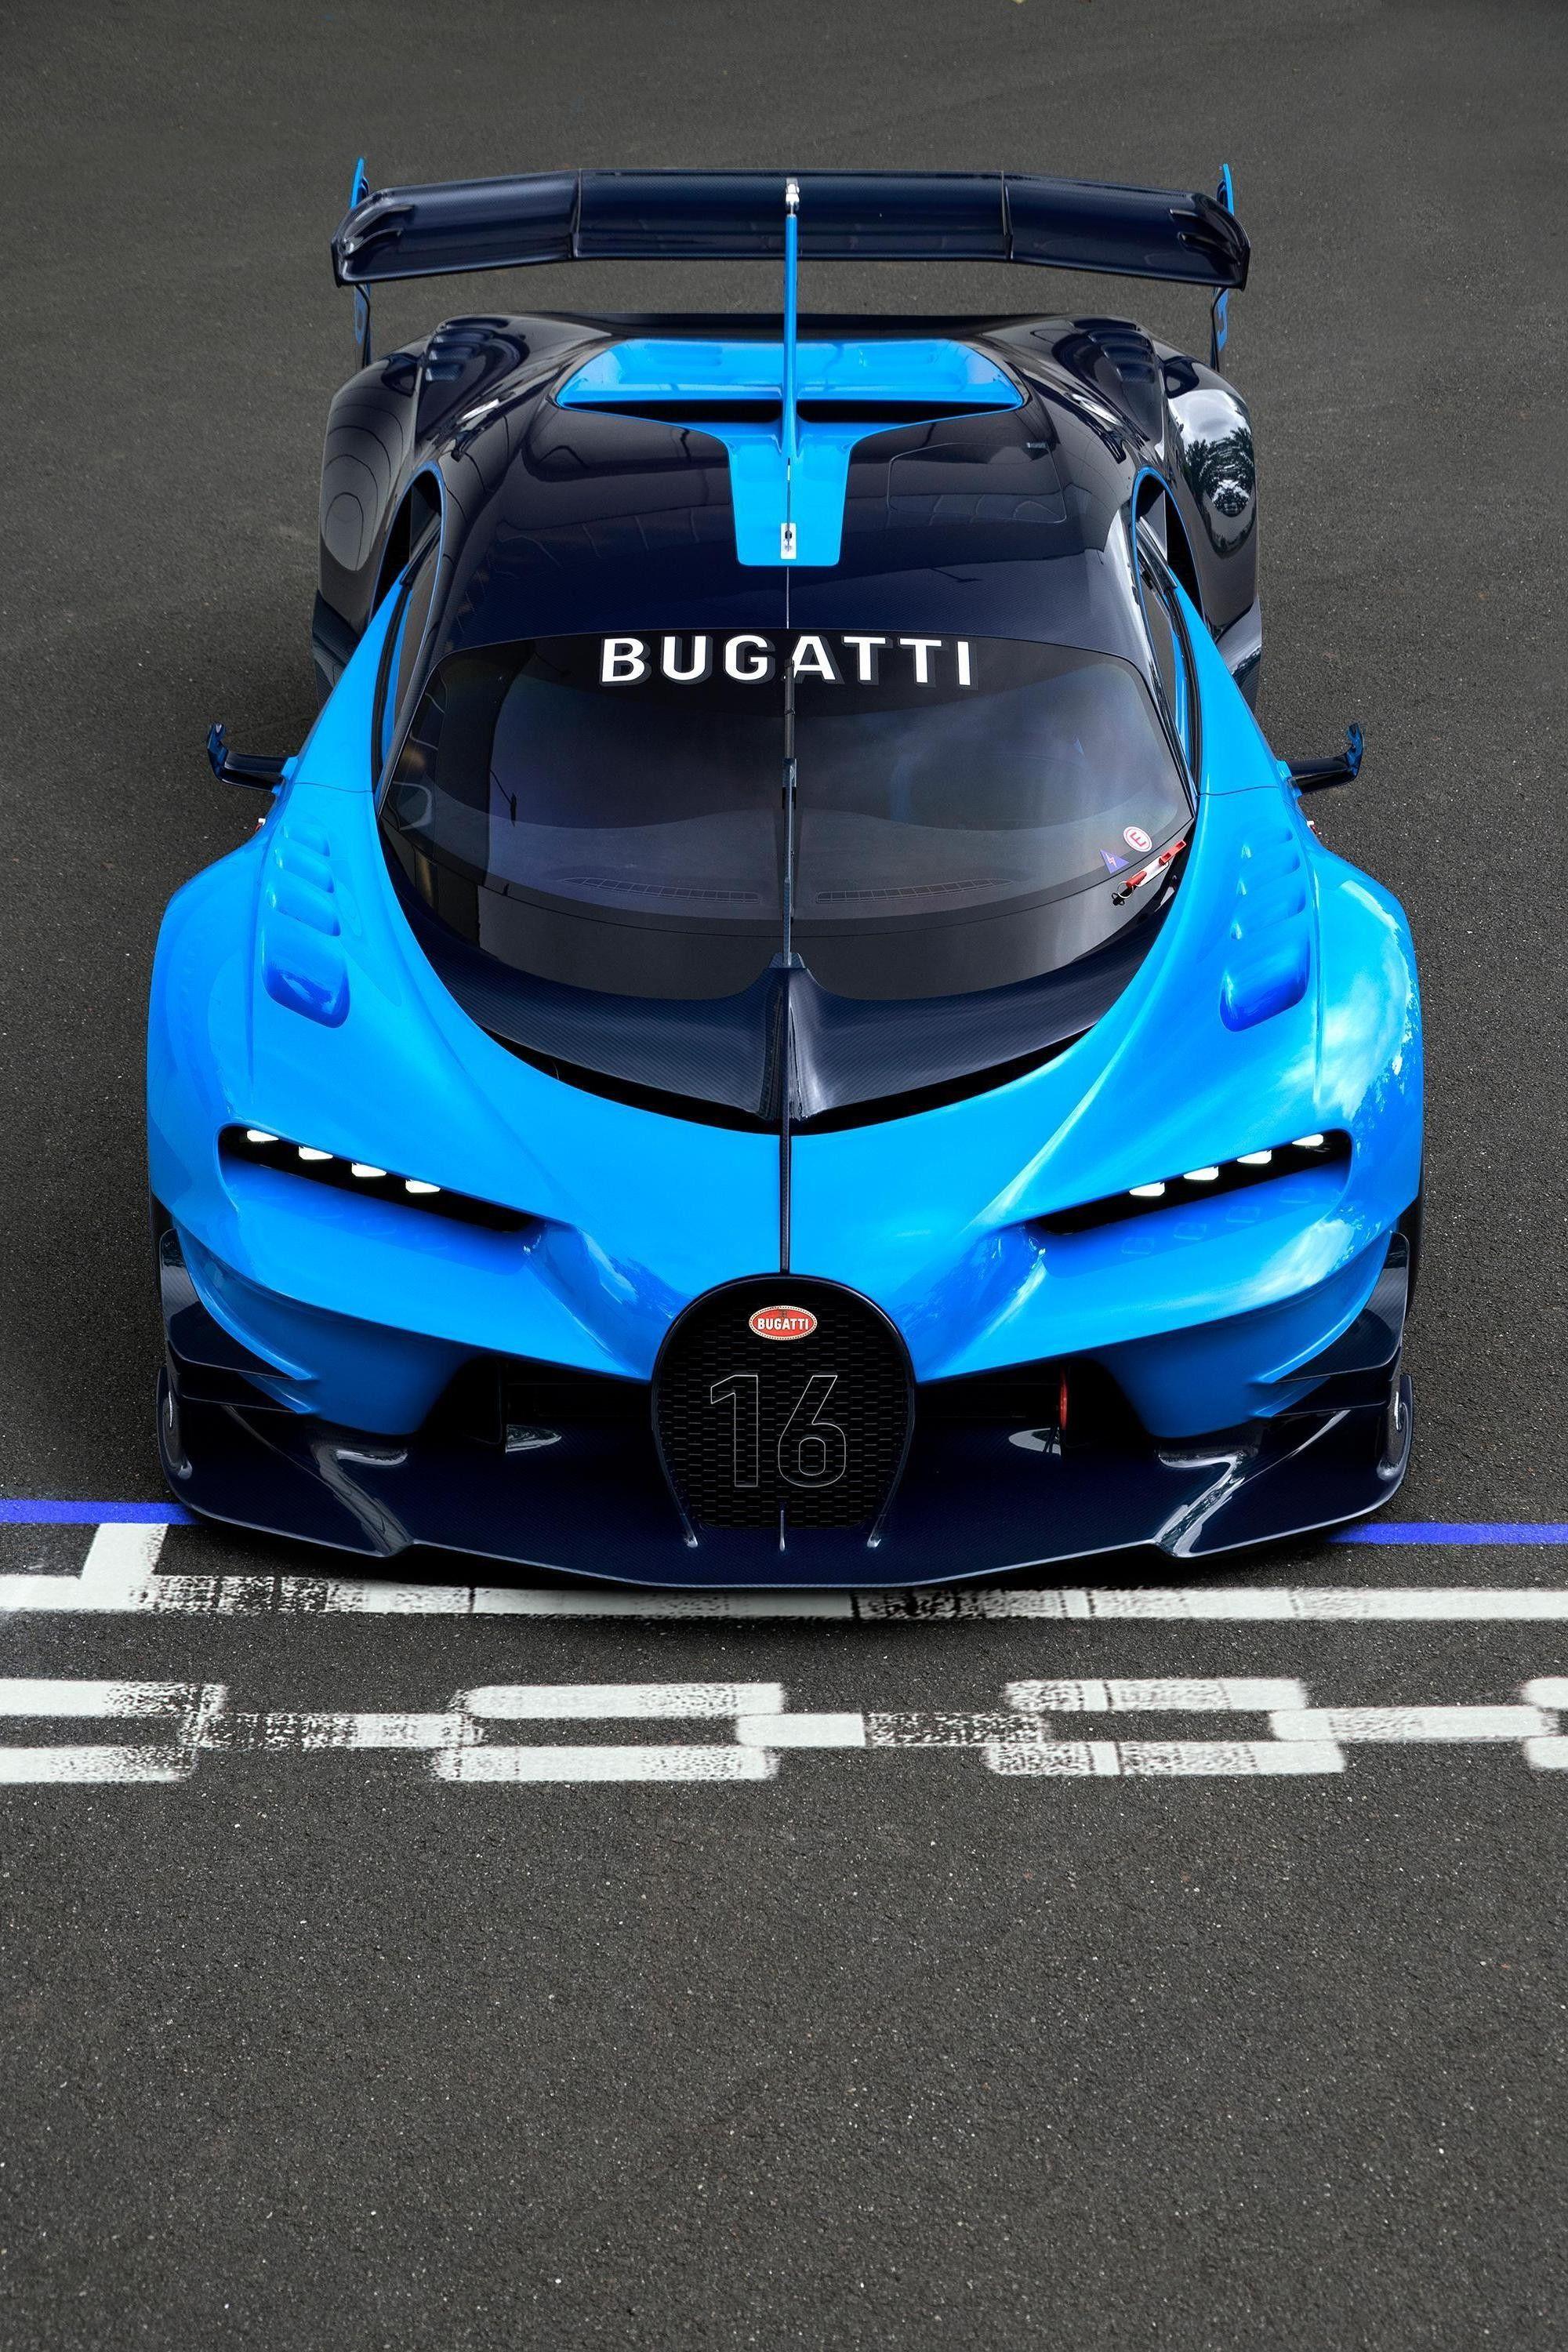 Bugatti Phone Wallpapers - Top Free Bugatti Phone Backgrounds ...